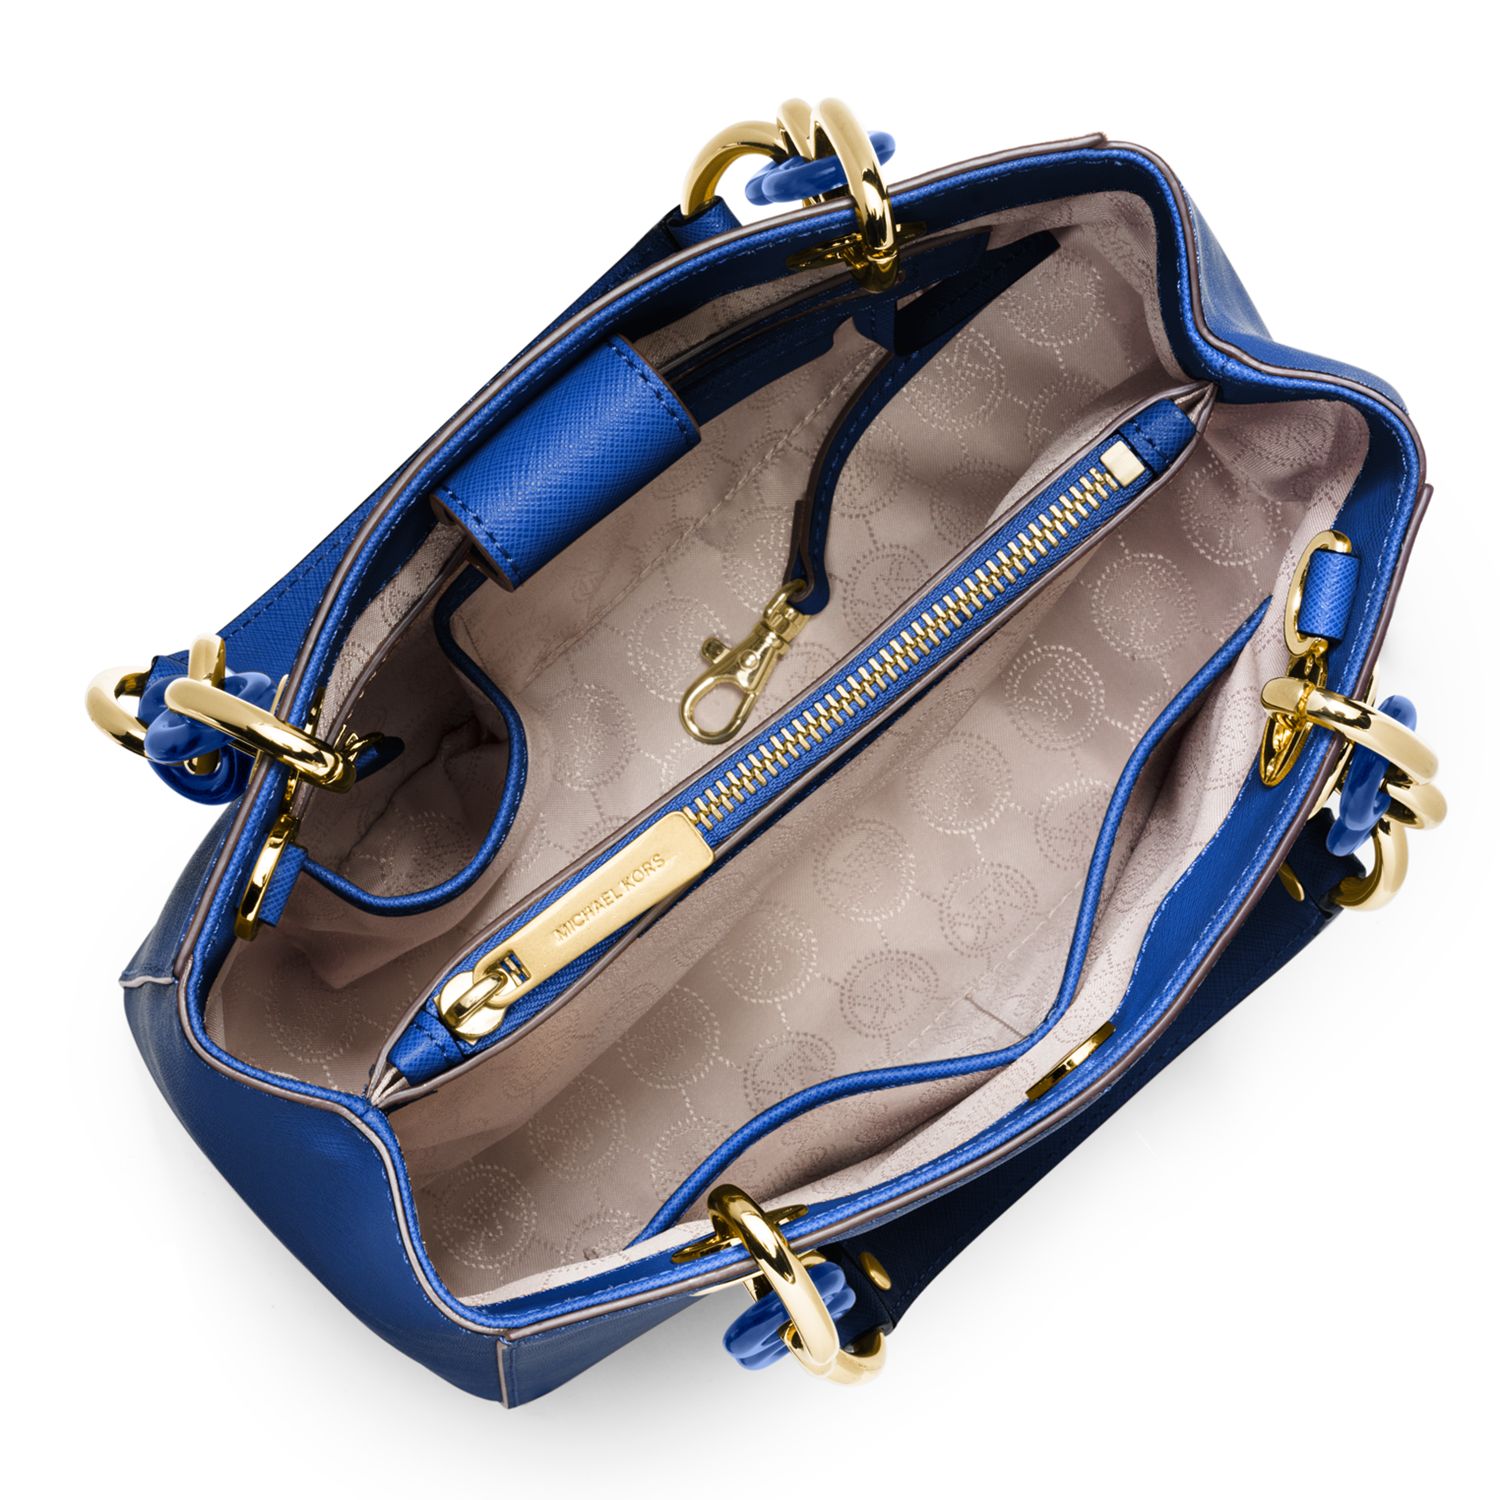 michael kors blue satchel bag